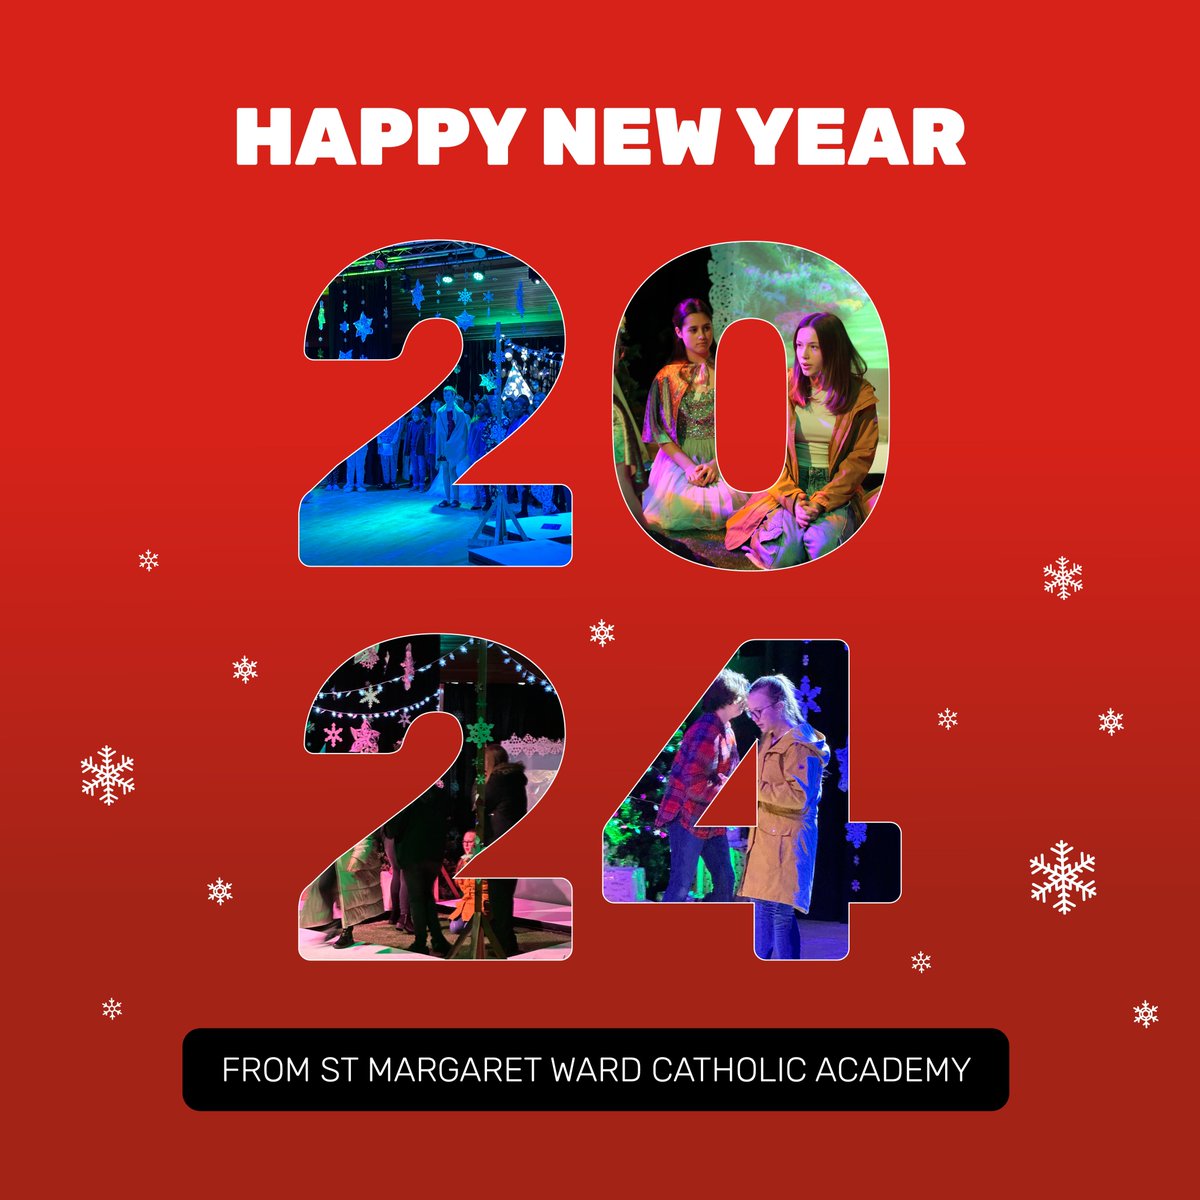 Happy New Year from everyone at St Margaret Ward Catholic Academy. #newyear #catholicschool